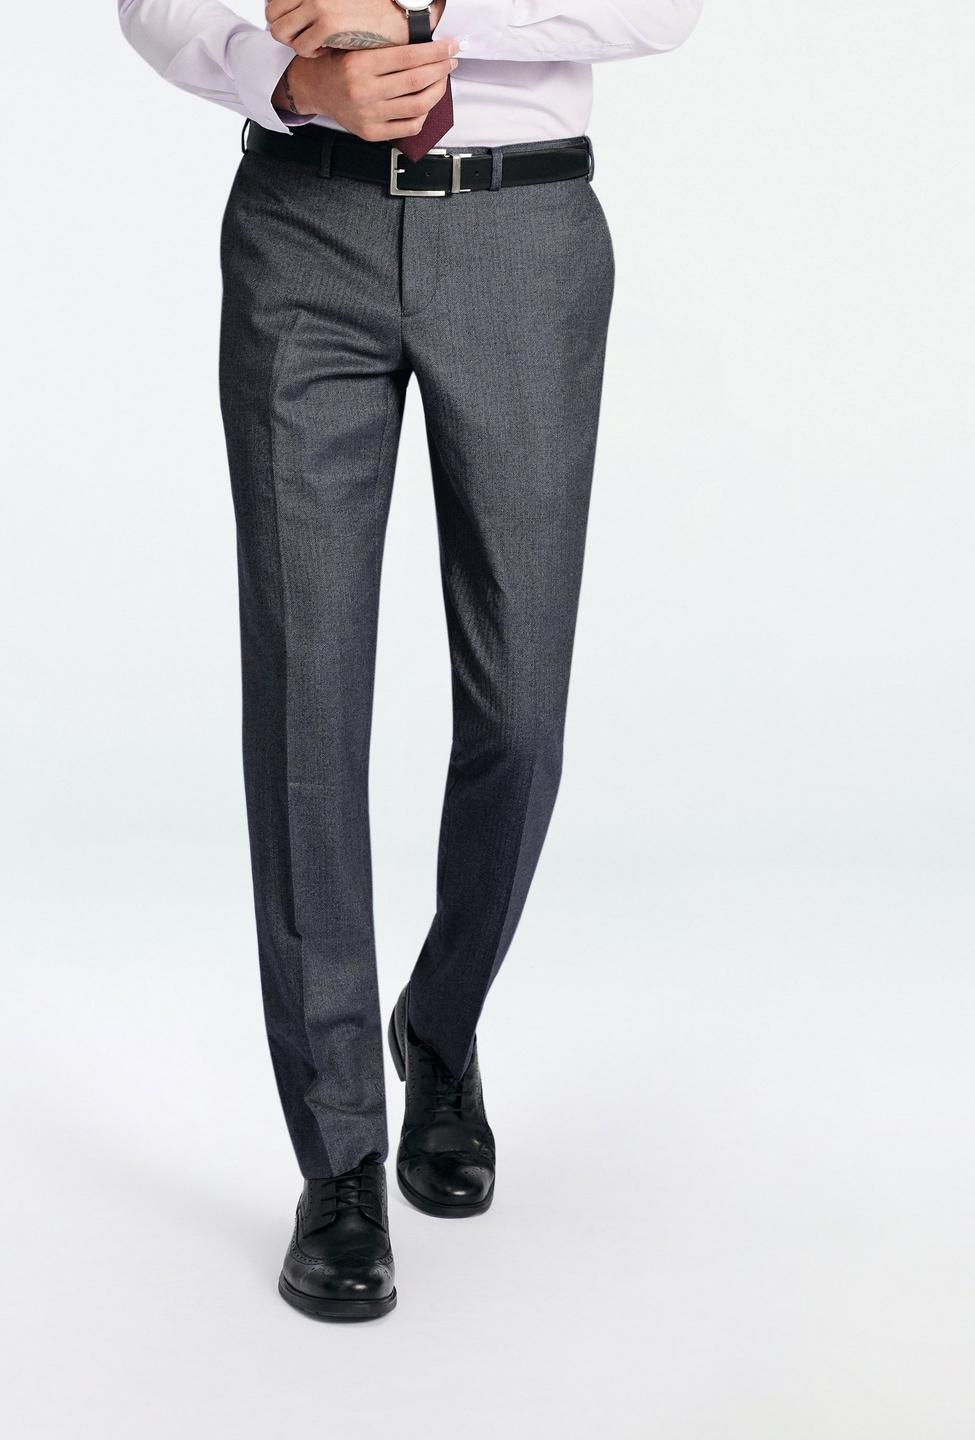 Gray pants - Prescot Herringbone Design from Seasonal Indochino Collection